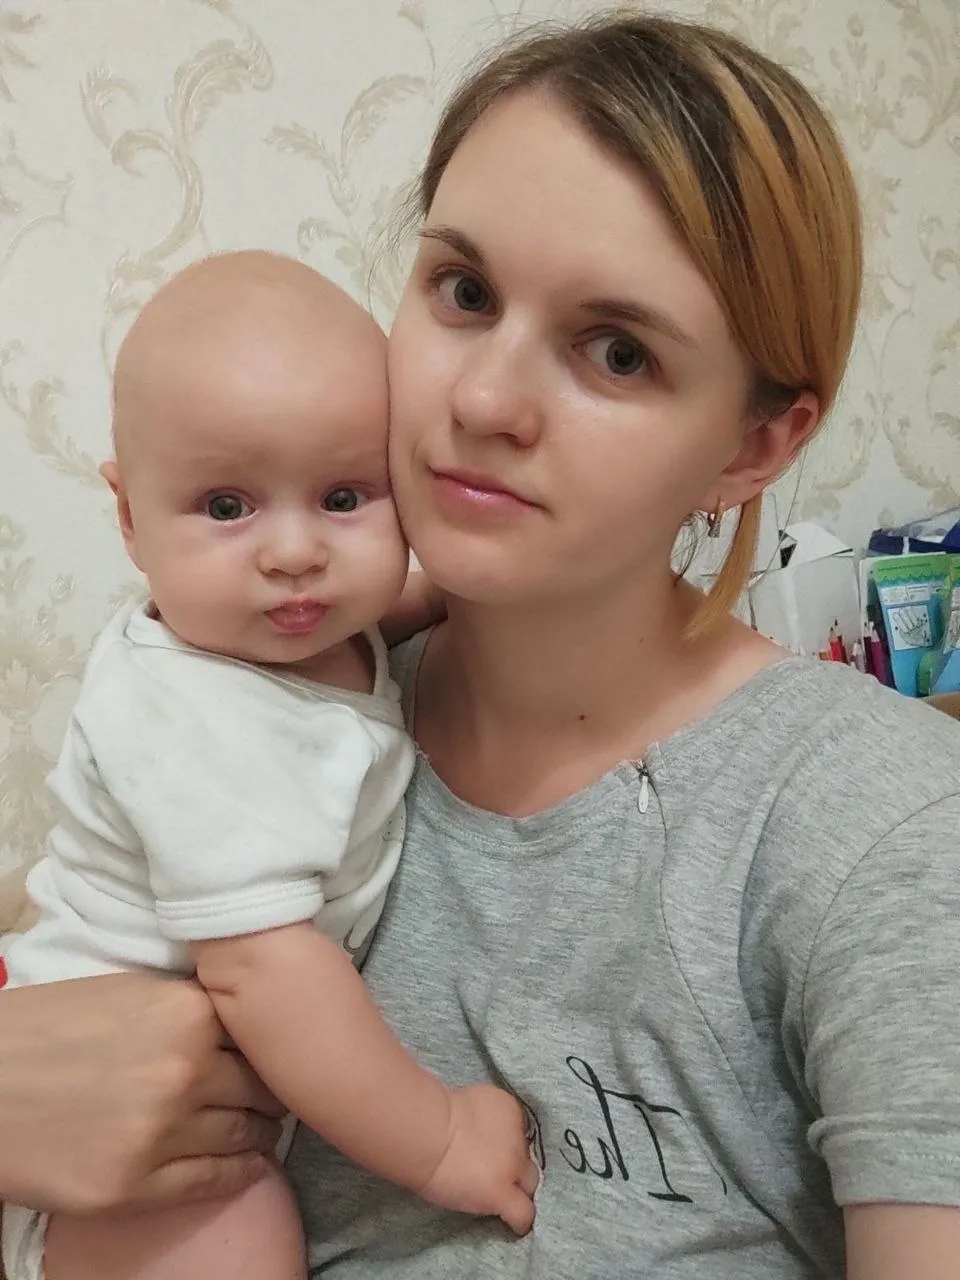 Olga, a Ukrainian refugee from Kharkiv